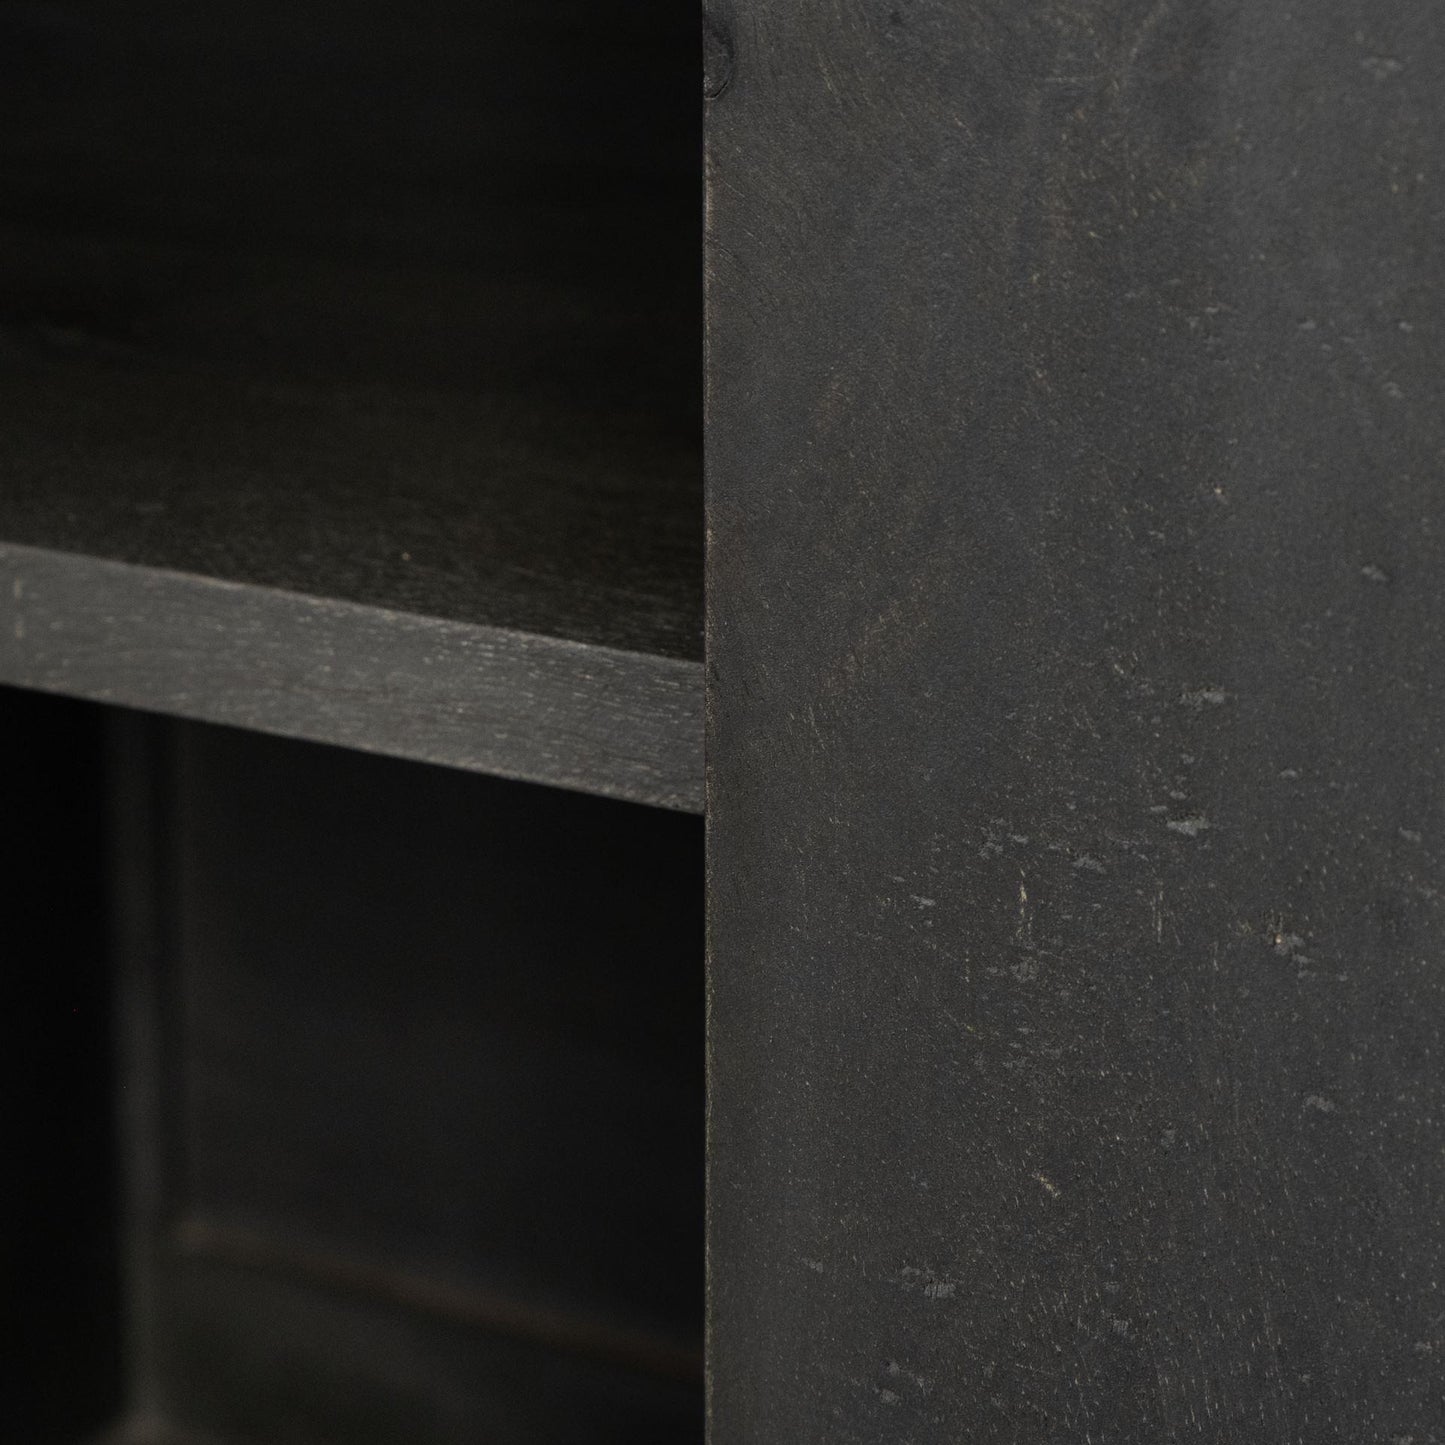 Vidro III 72 x 18 x 36 Glass Top Gray 4 Solid Wood Cabinets Metal Frame Sideboard